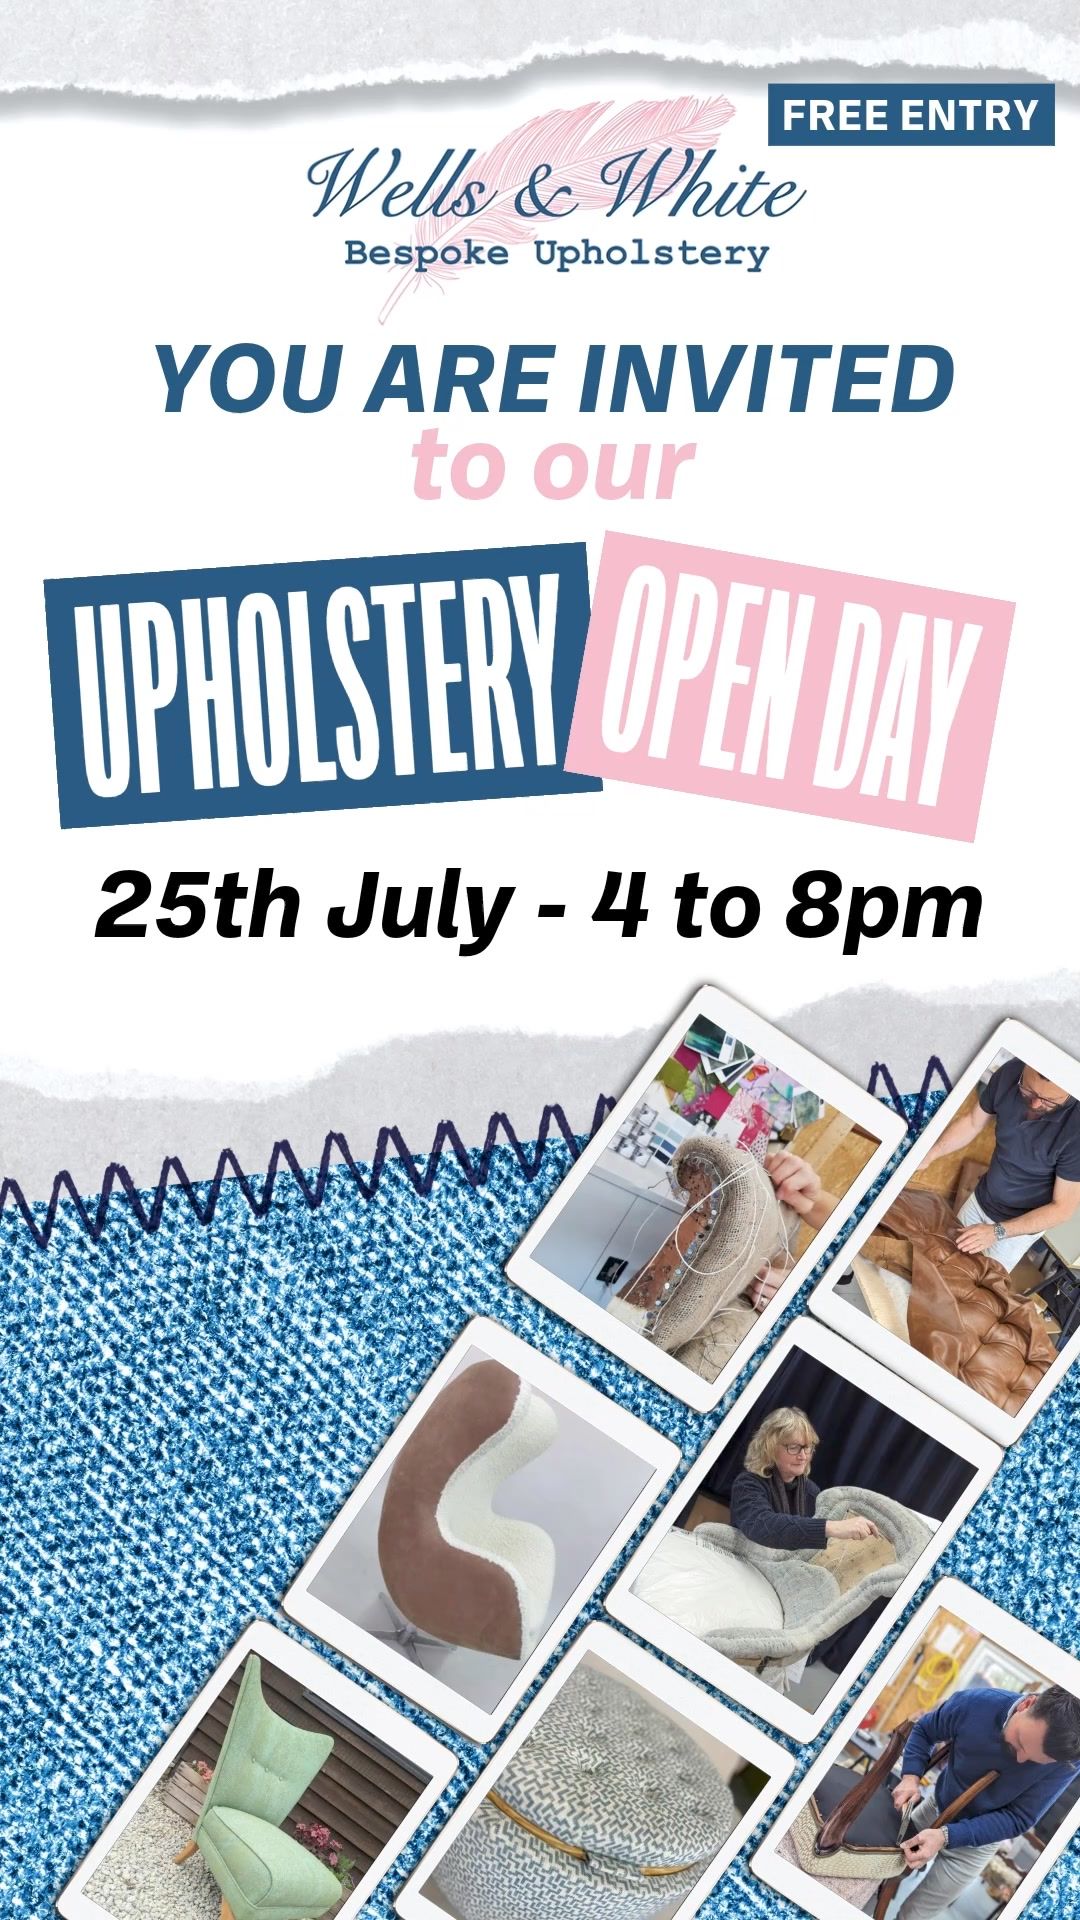 Upholstery School Open Day